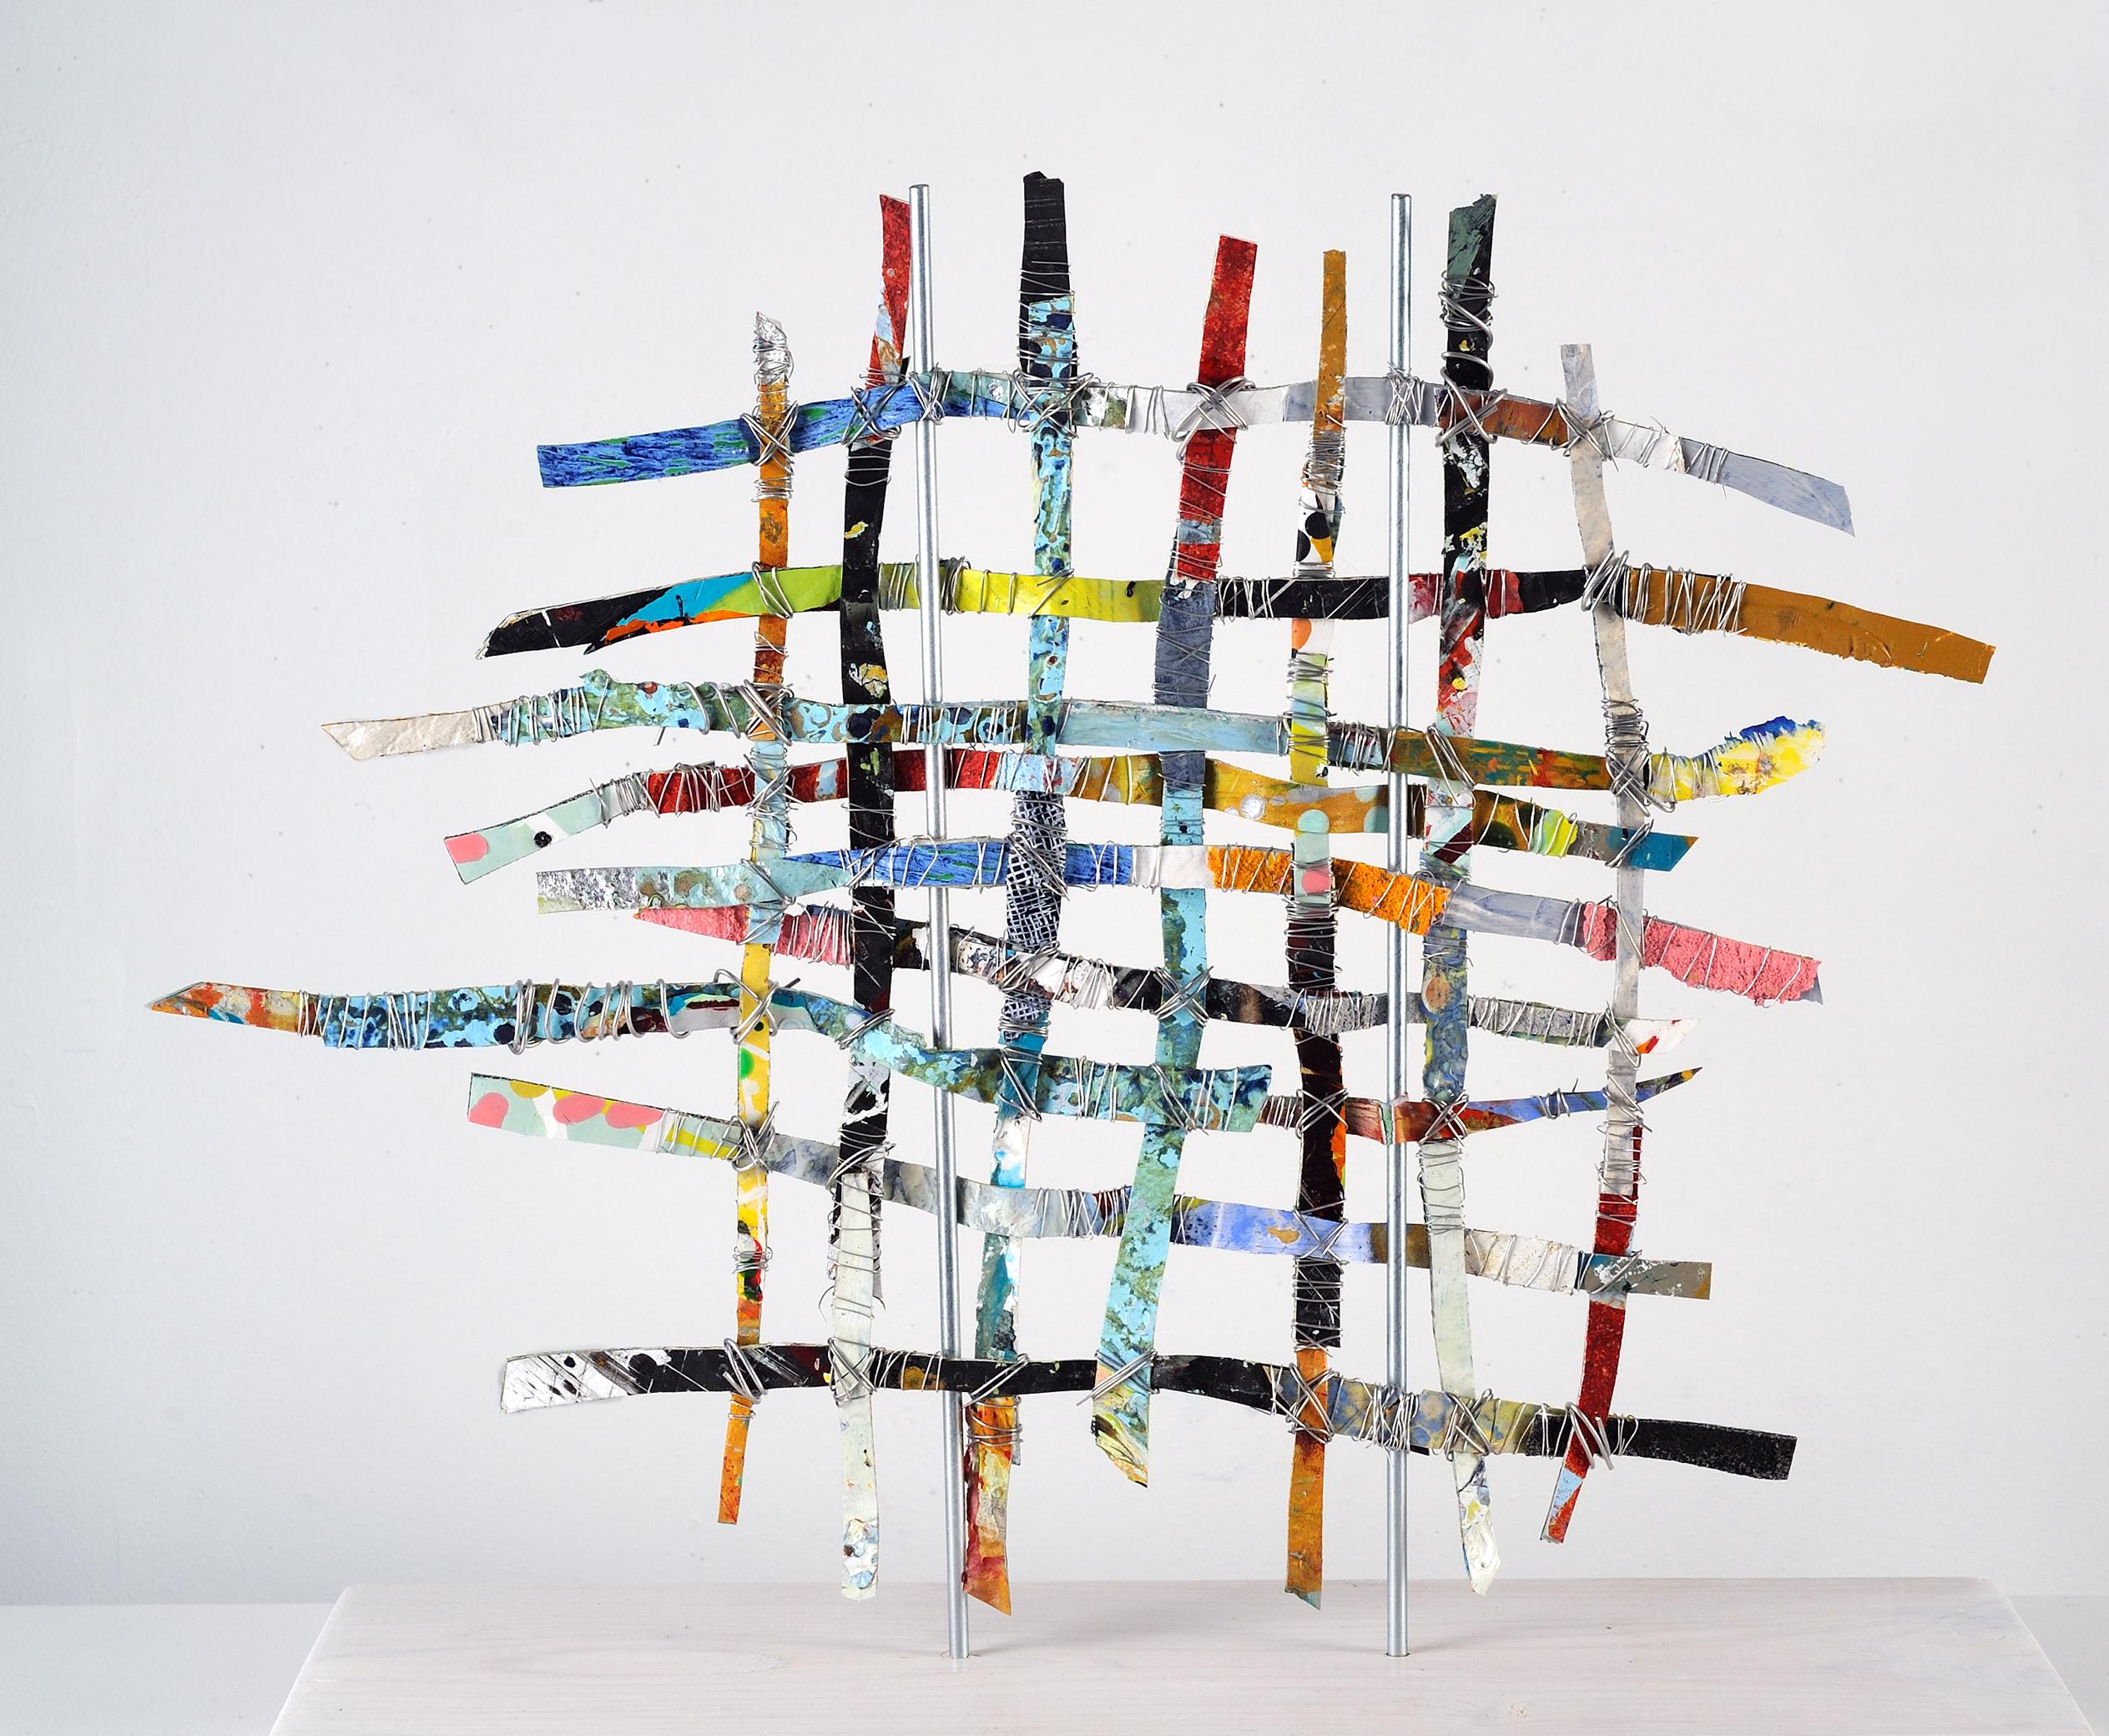 Francie Hester Abstract Sculpture - Renewal #2, mixed media aluminum sculpture, multicolored grid, 16 x 16 inches